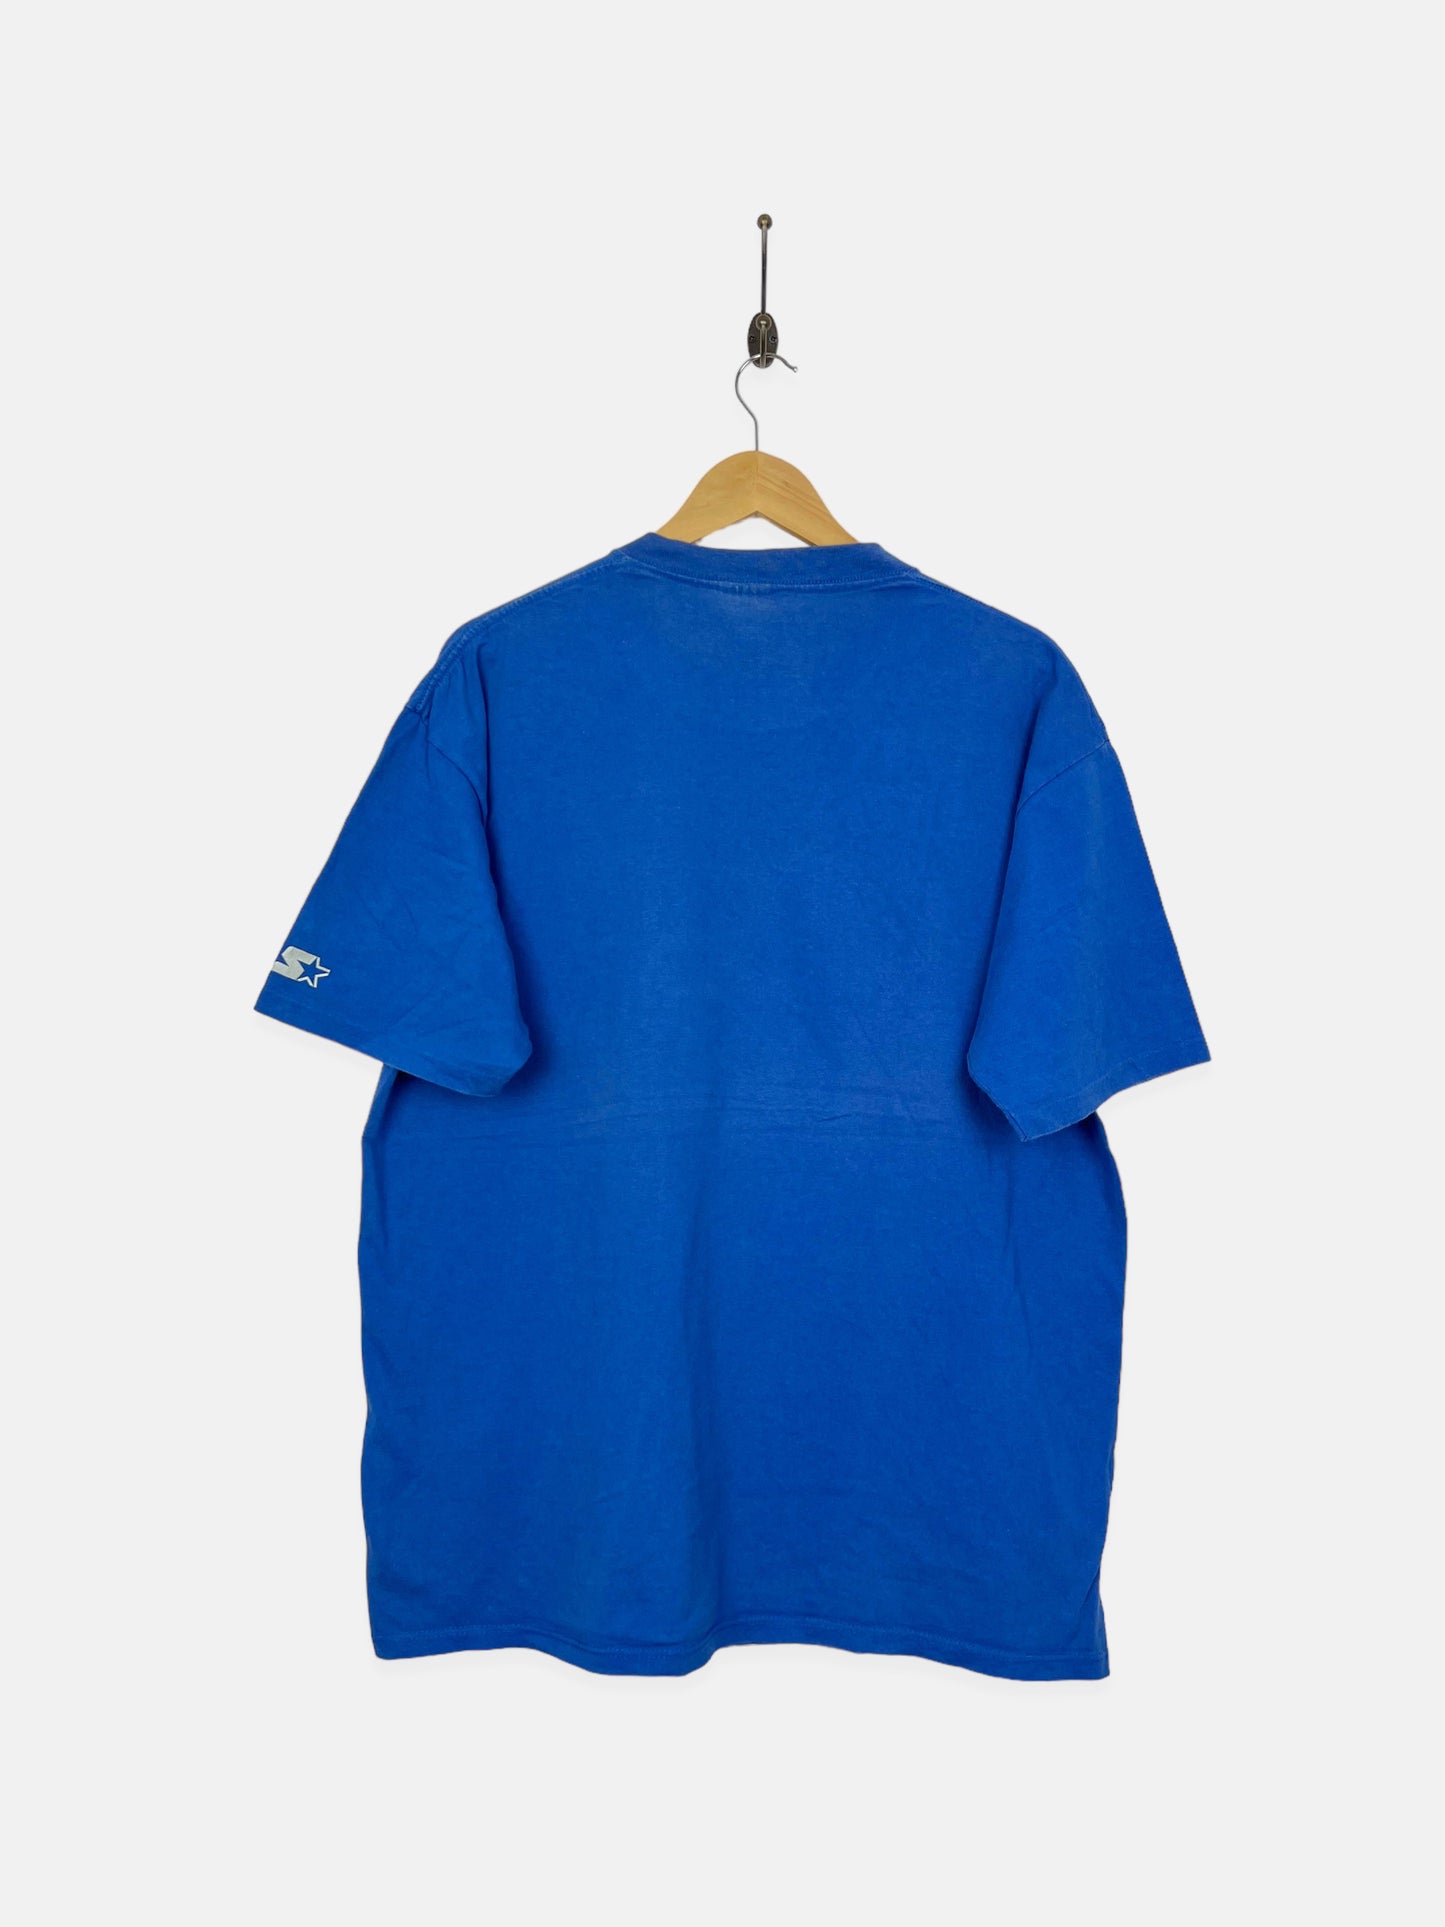 1991 New York Mets MLB Starter USA Made Vintage T-Shirt Size XL